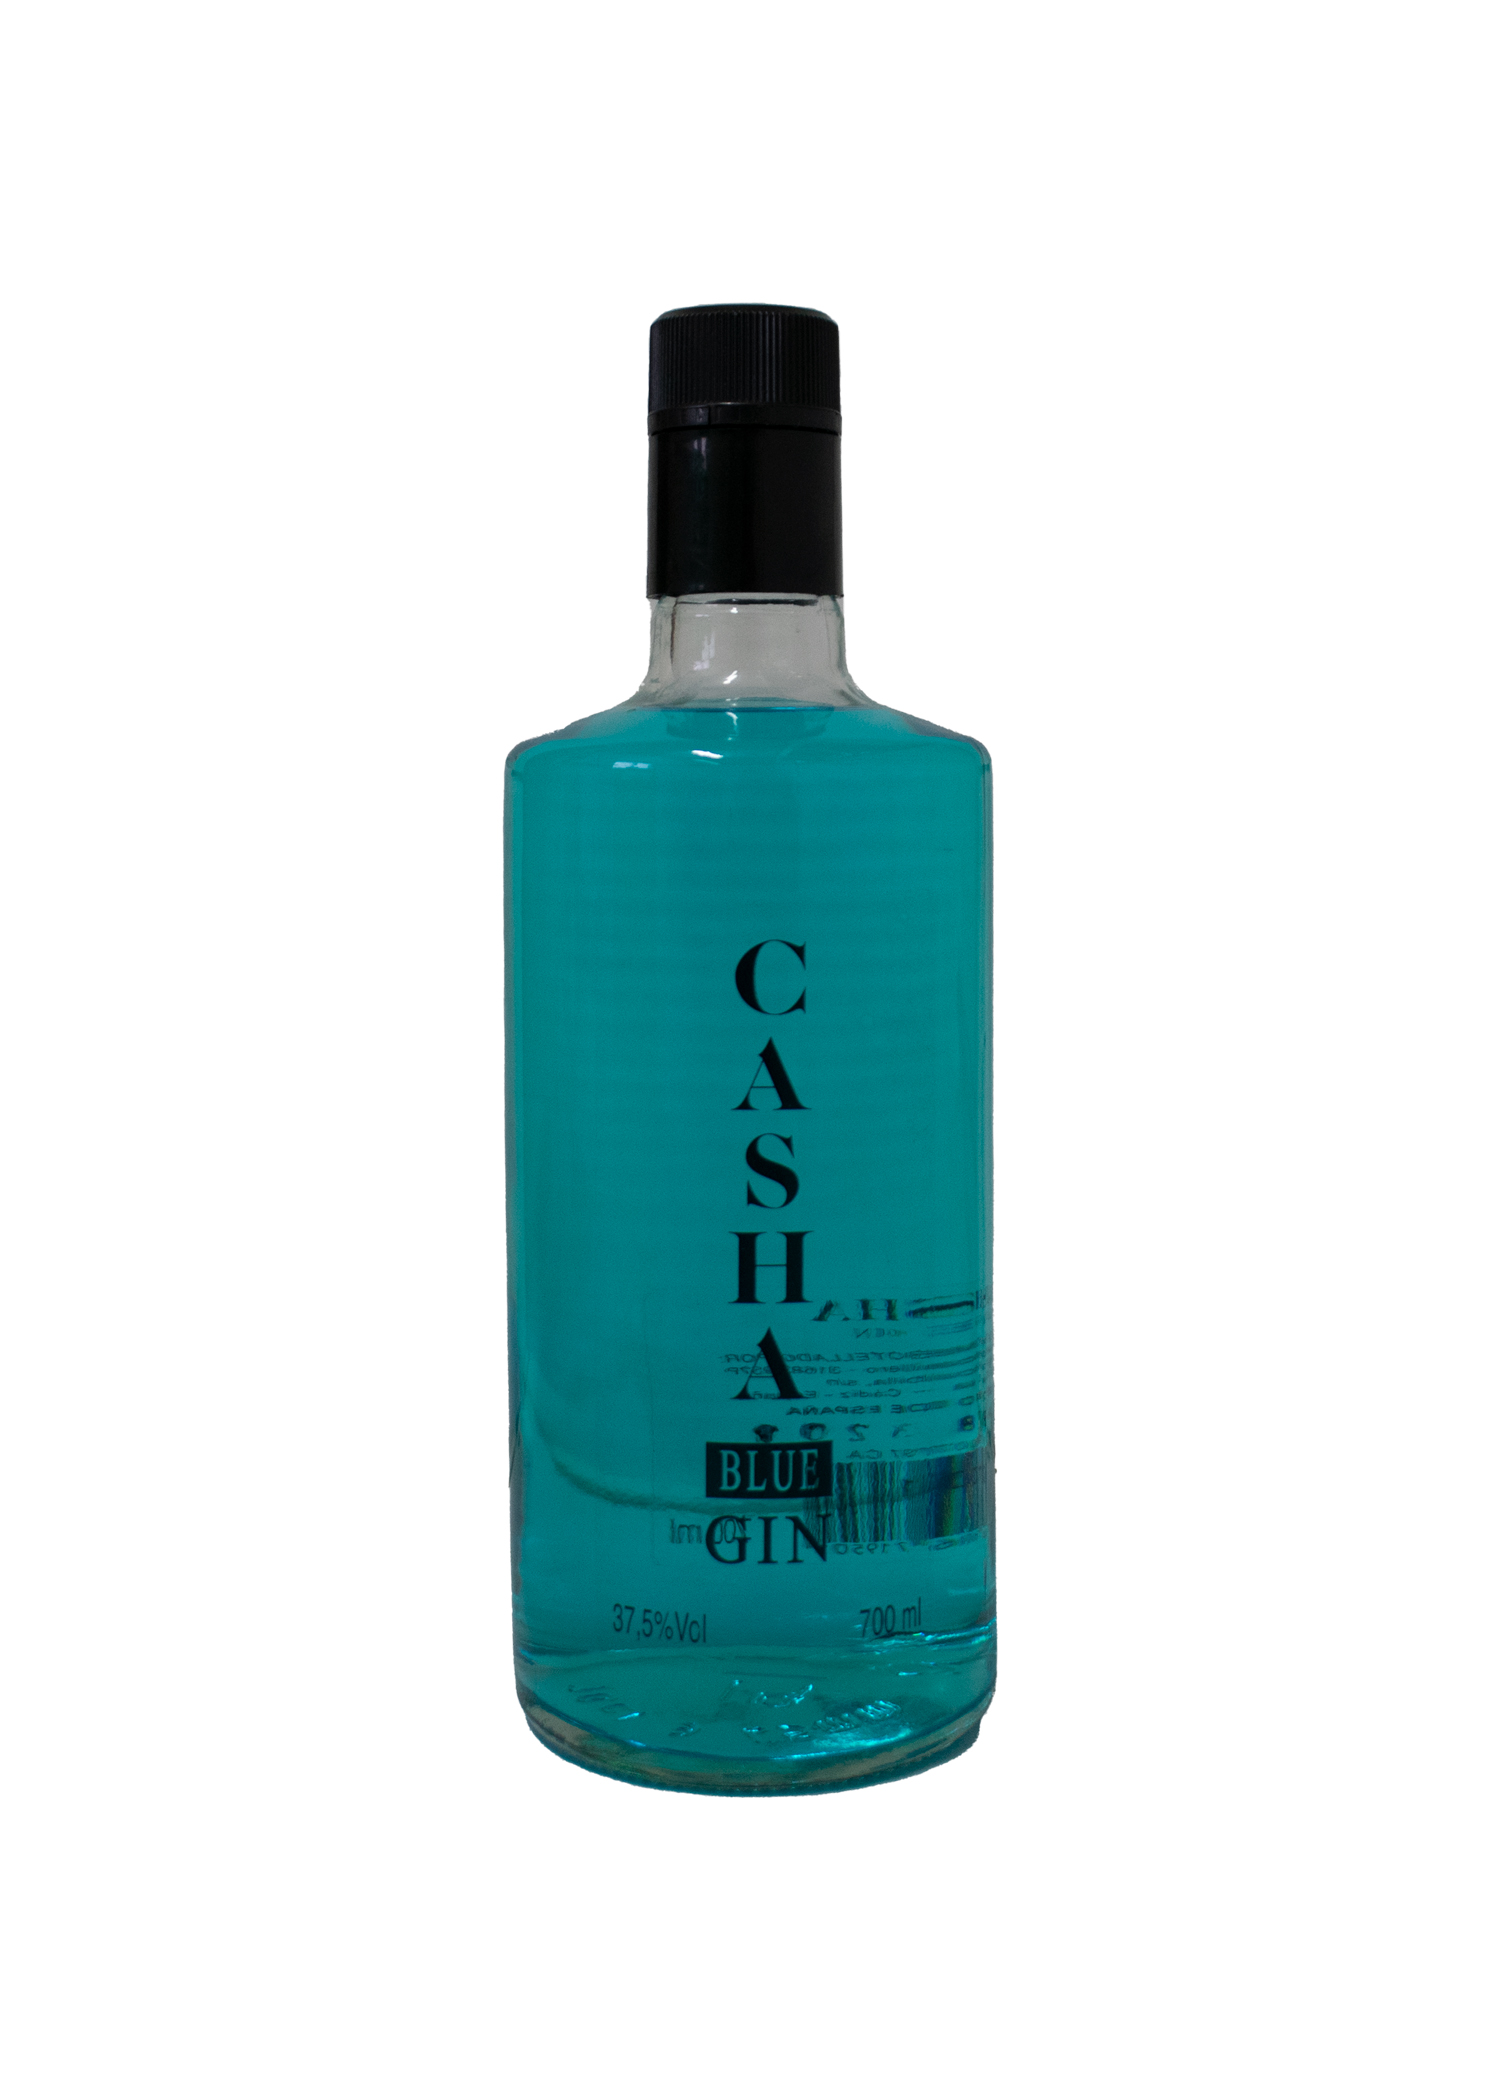 Casha Gin Blue 750ml.  37,5%vol